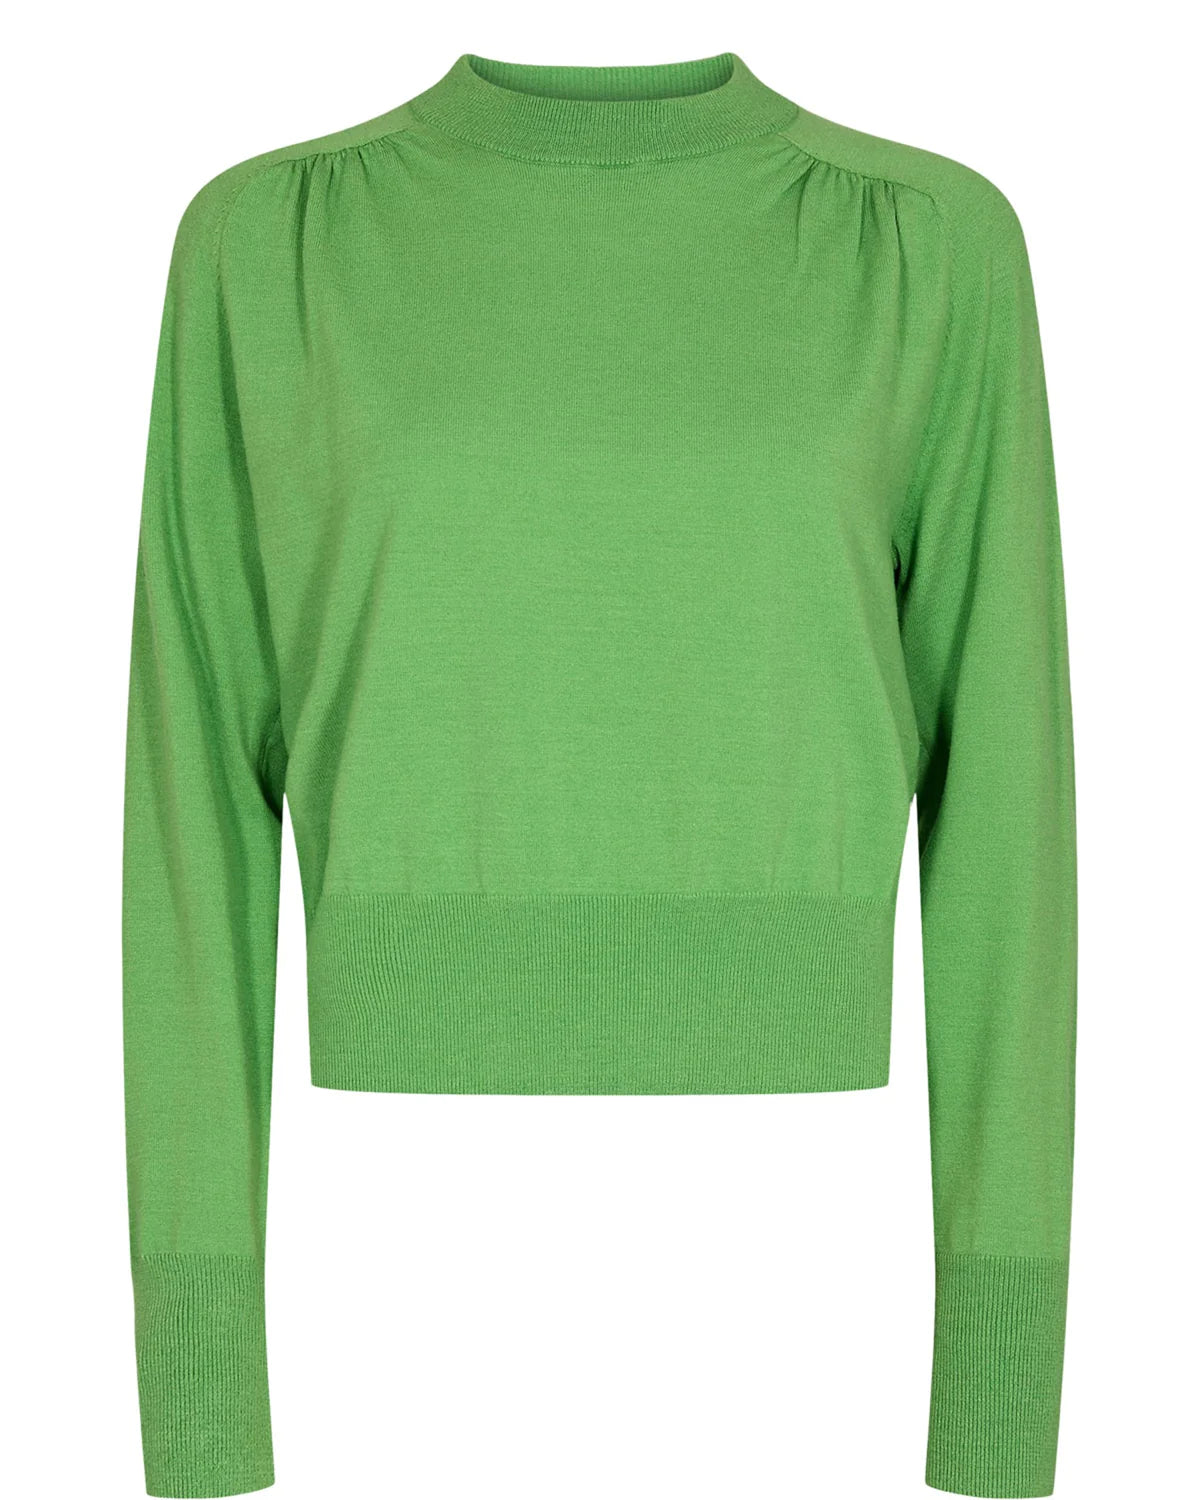 Nusila pullover - greenery